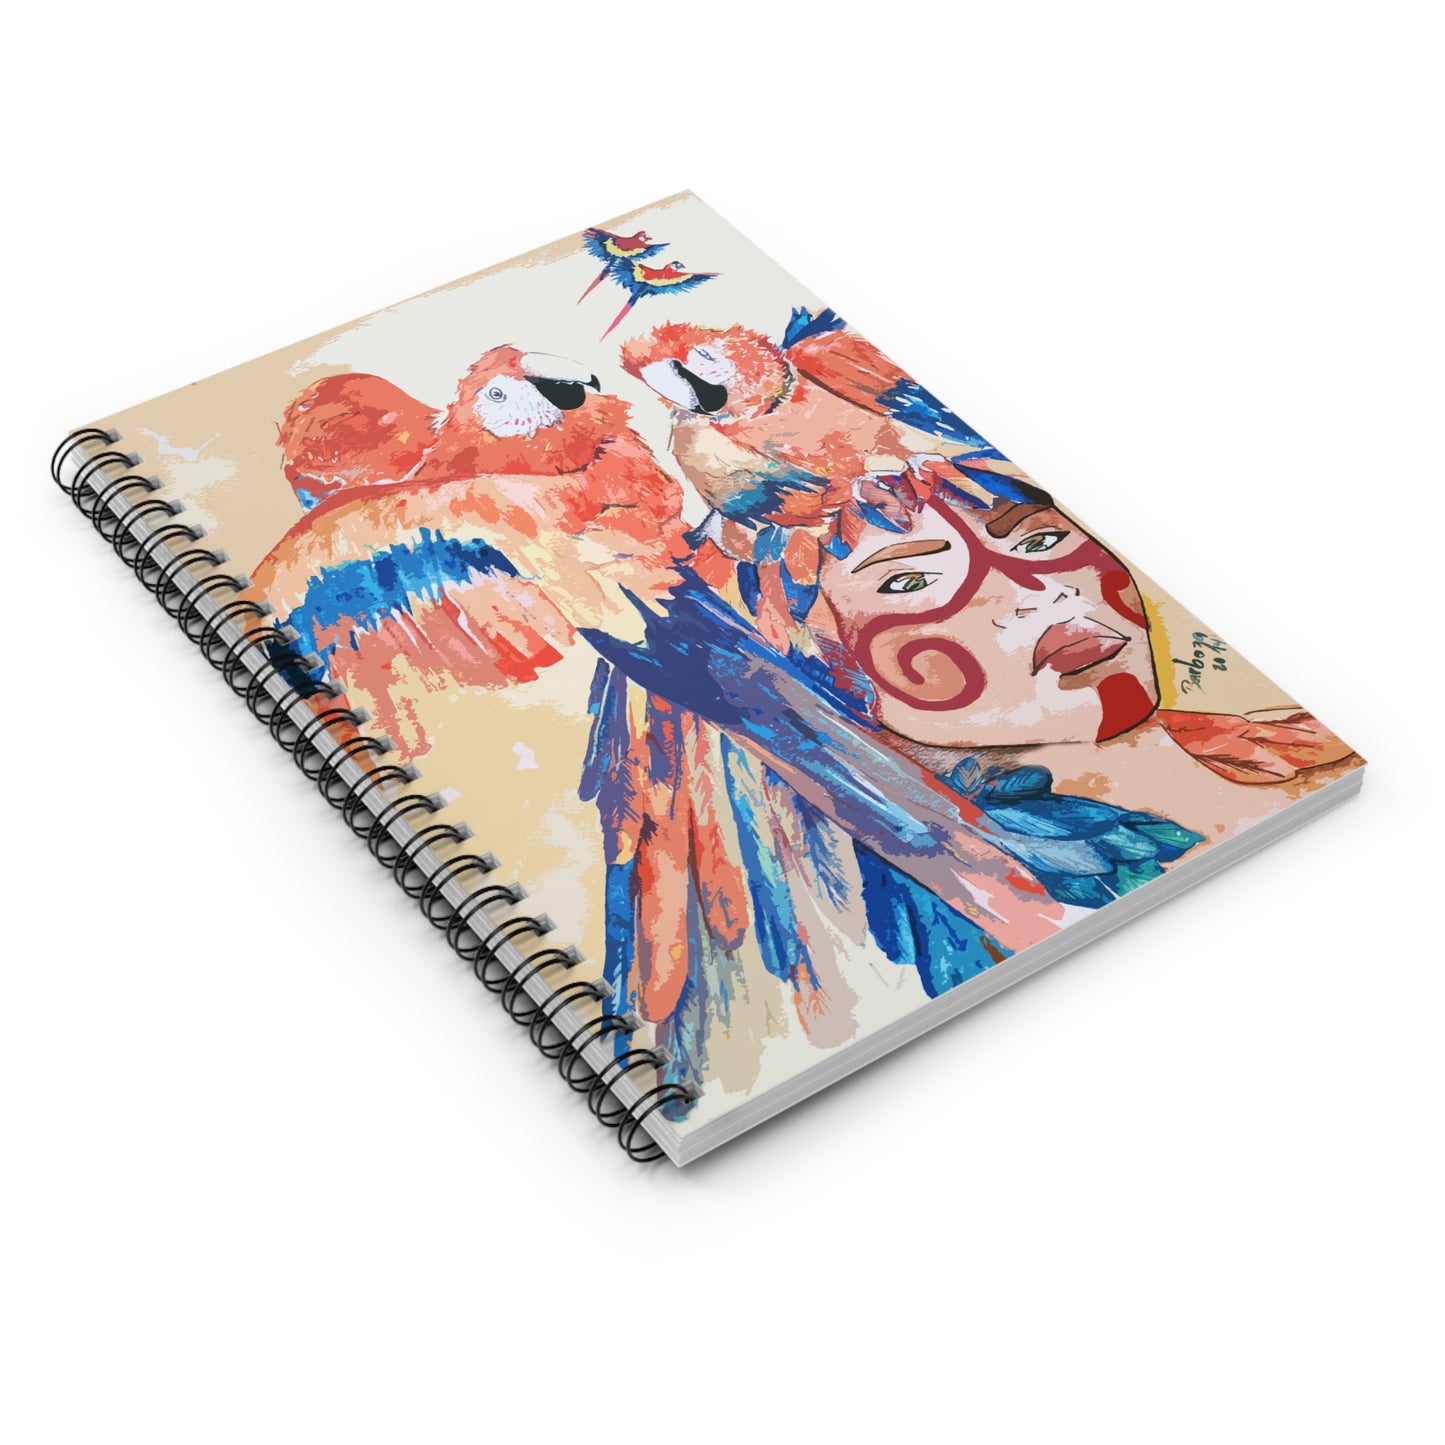 Guajira and Guacamaya, papagayo, loro, Macaw Art - Spiral Notebook - Ruled Line